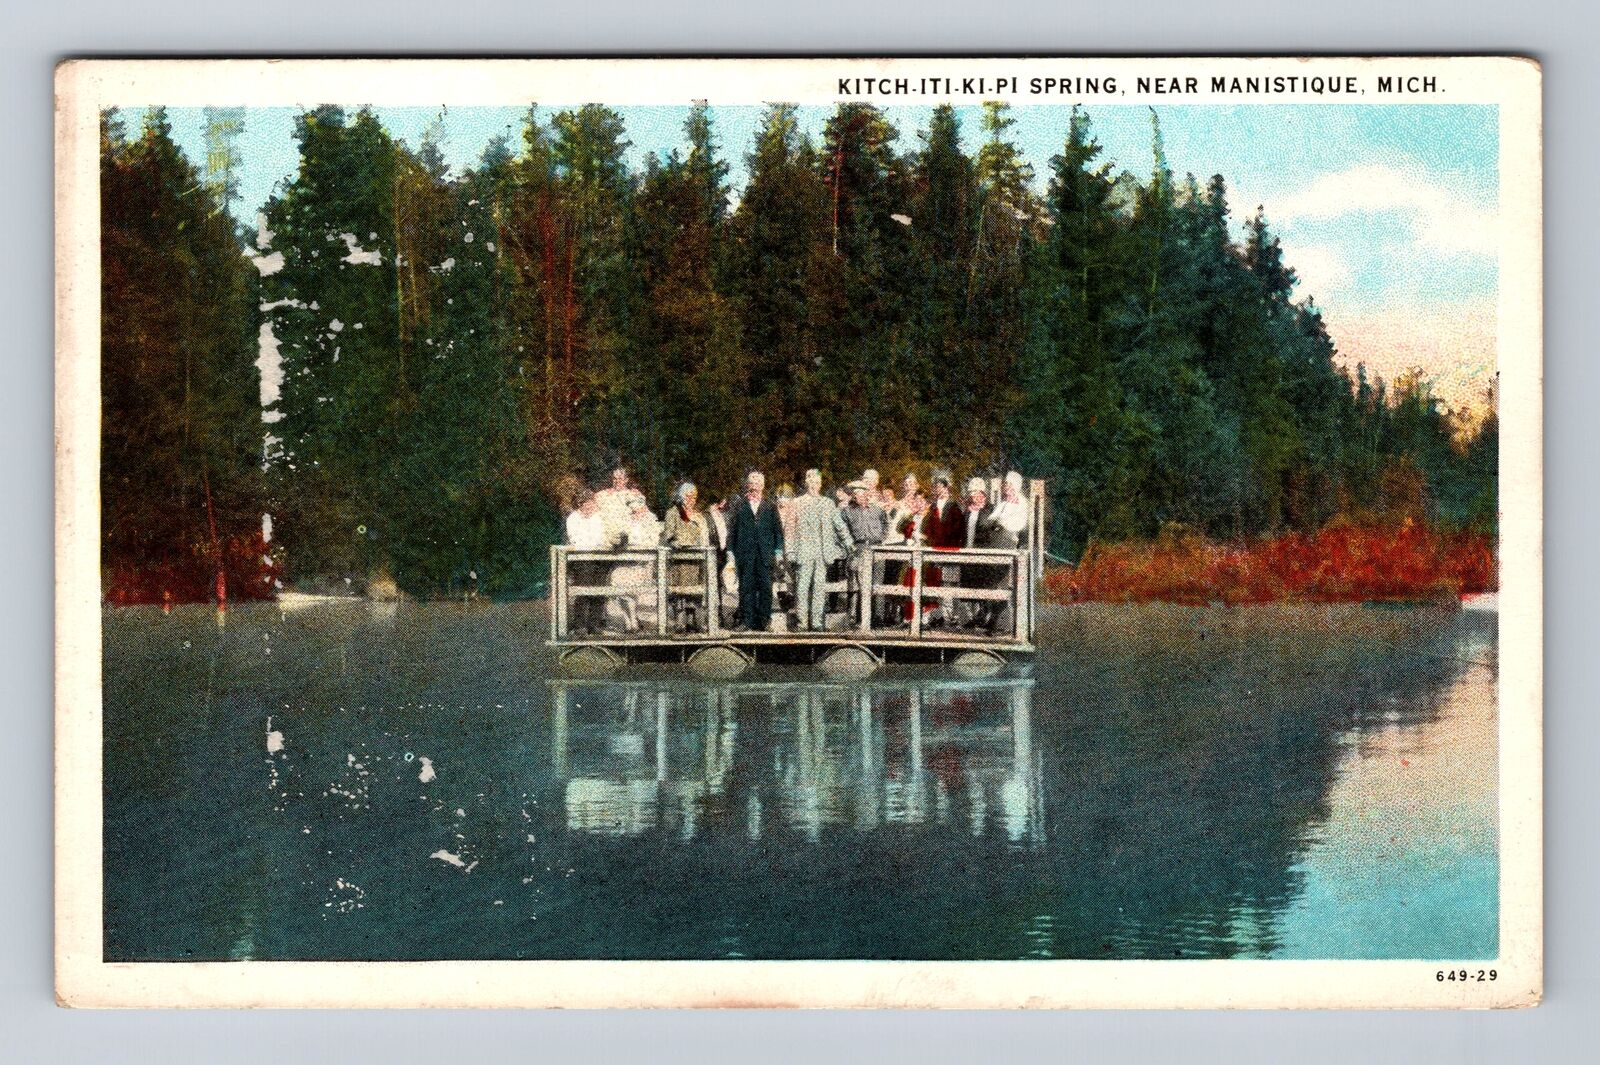 Manistique MI-Michigan, Kitch-Iti-Ki-Pi Spring, Antique, Vintage Postcard